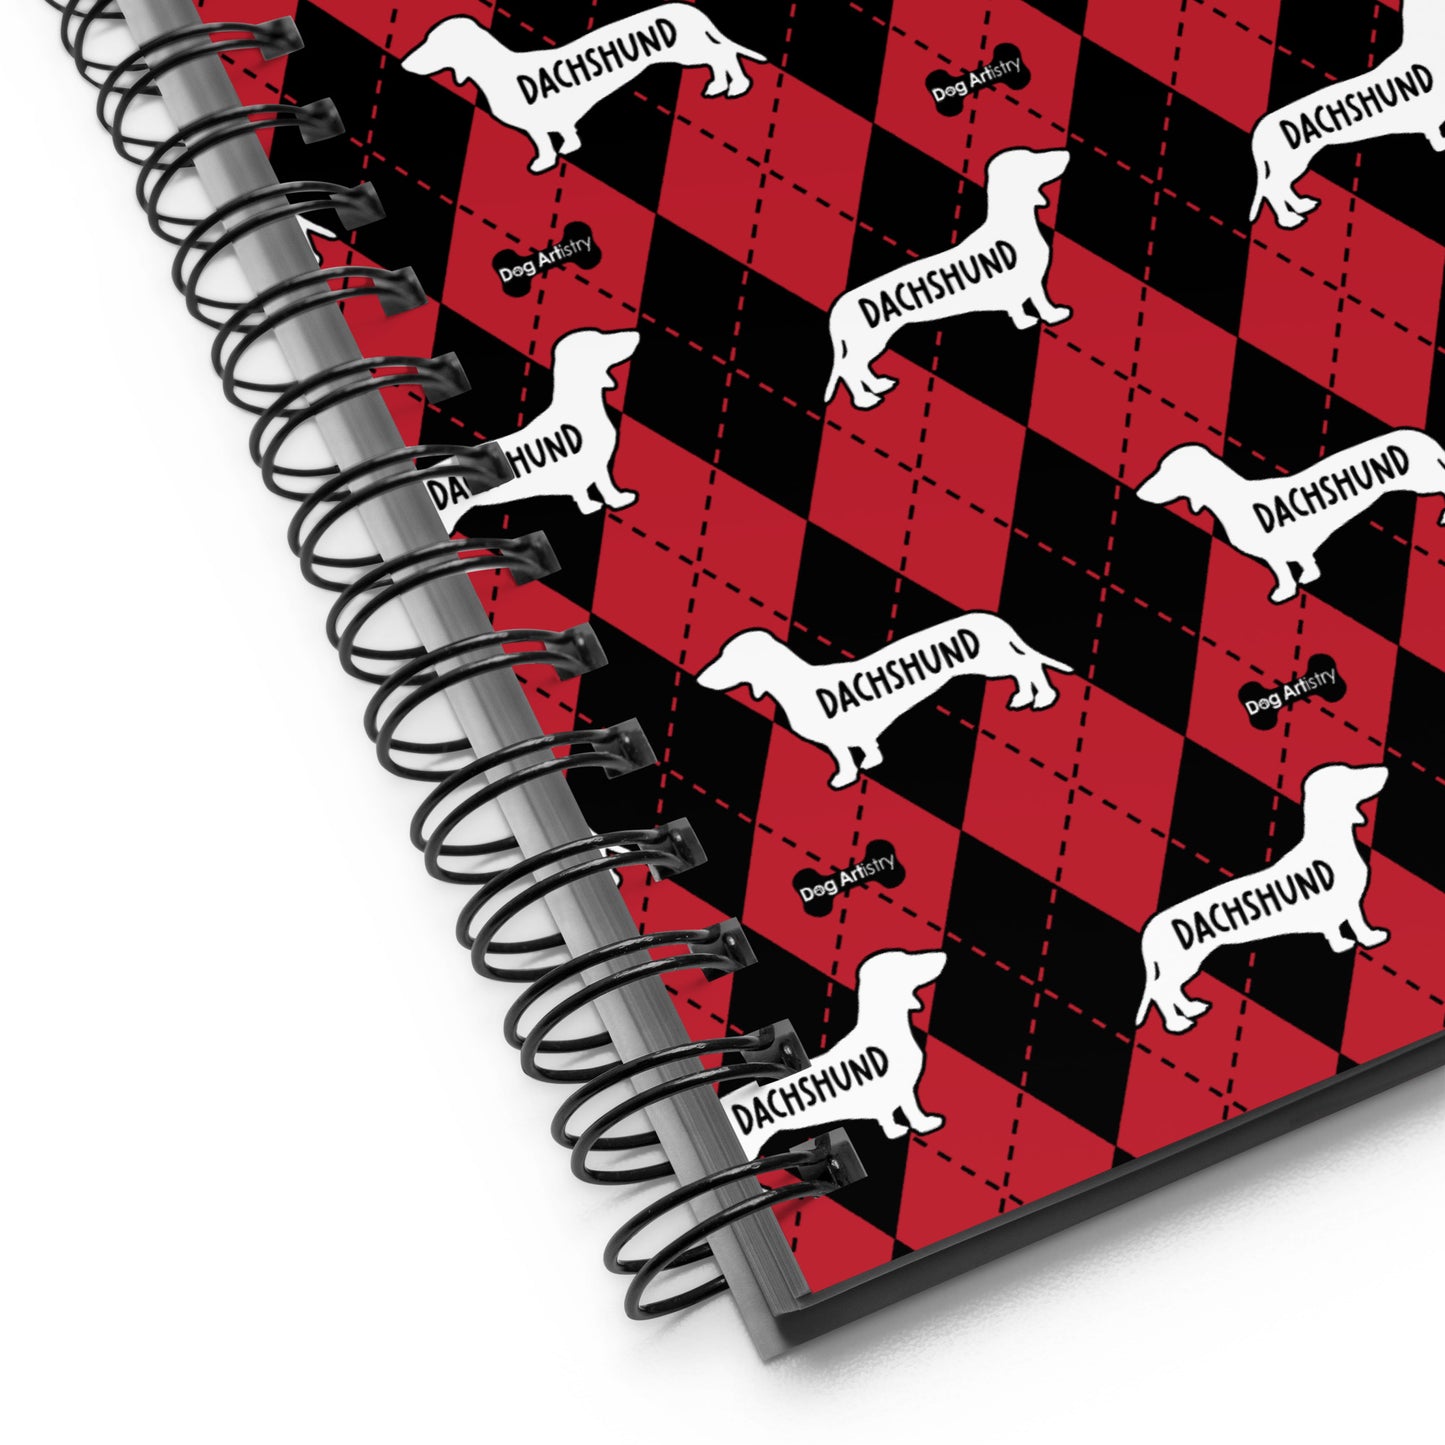 Dachshund Argyle Red and Black Spiral Notebooks